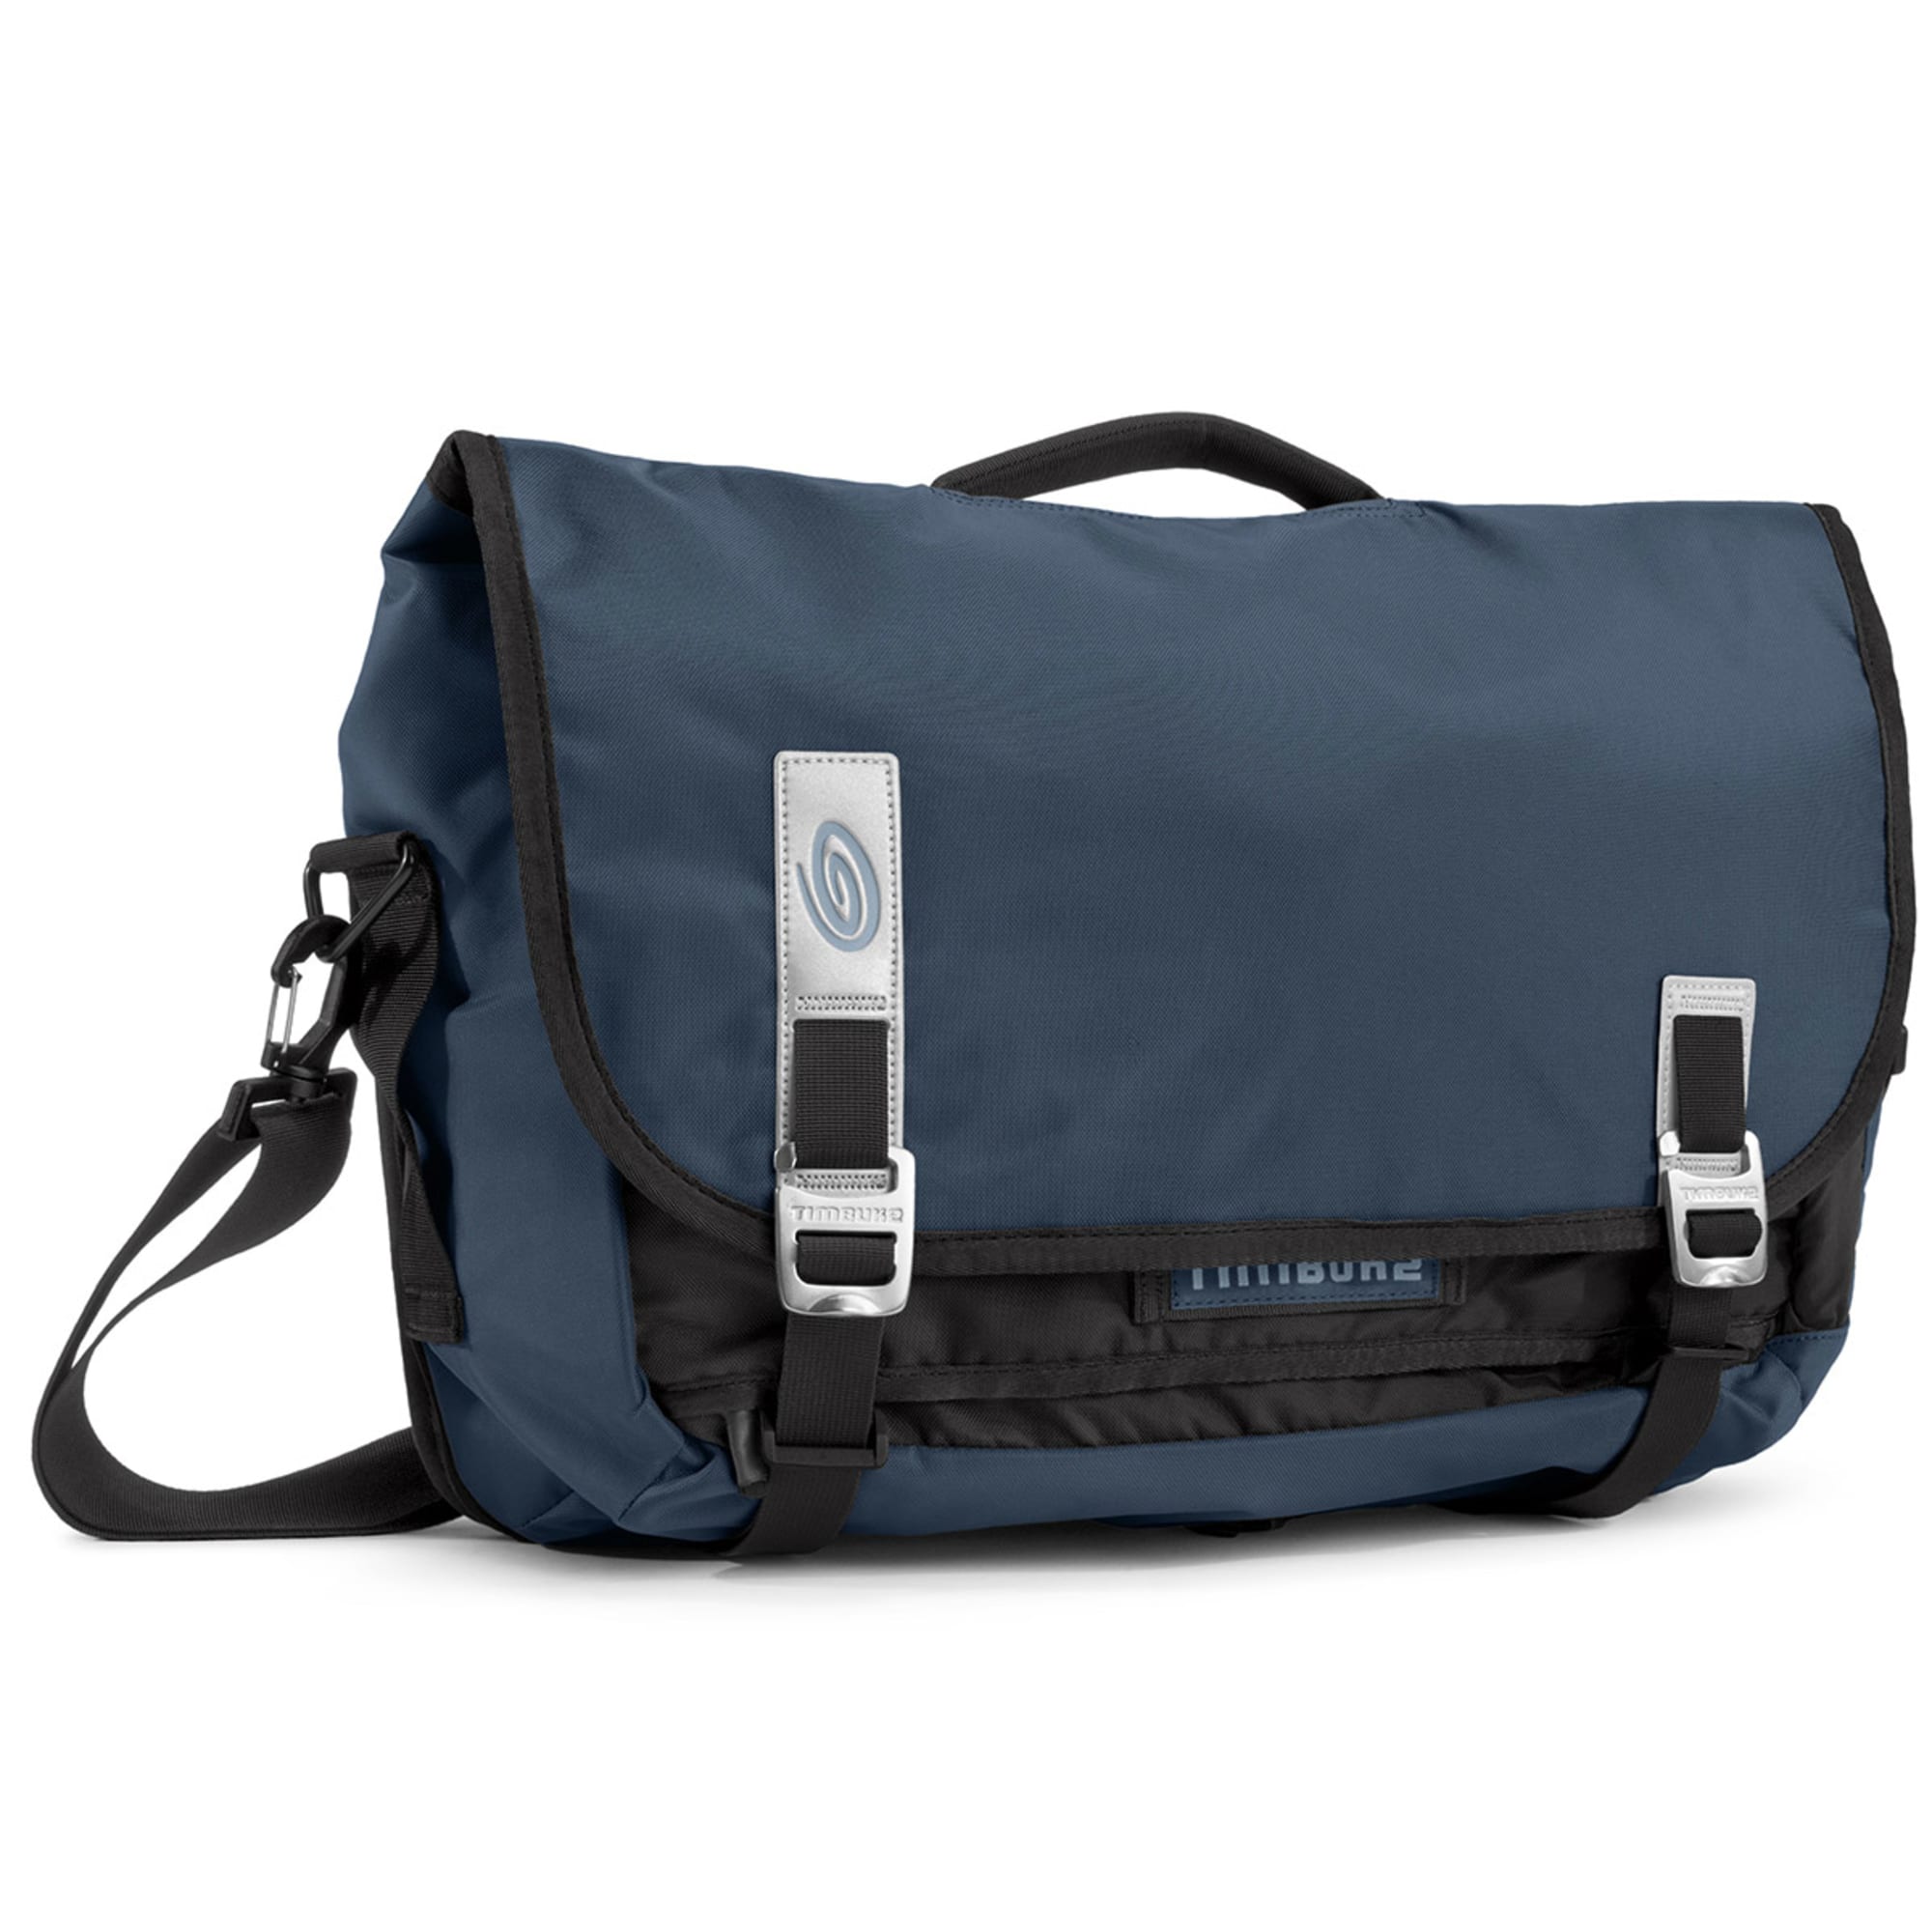 Timbuk2 Command Messenger Bag Crossbody Padded Gray/Blue TSA Friendly Laptop